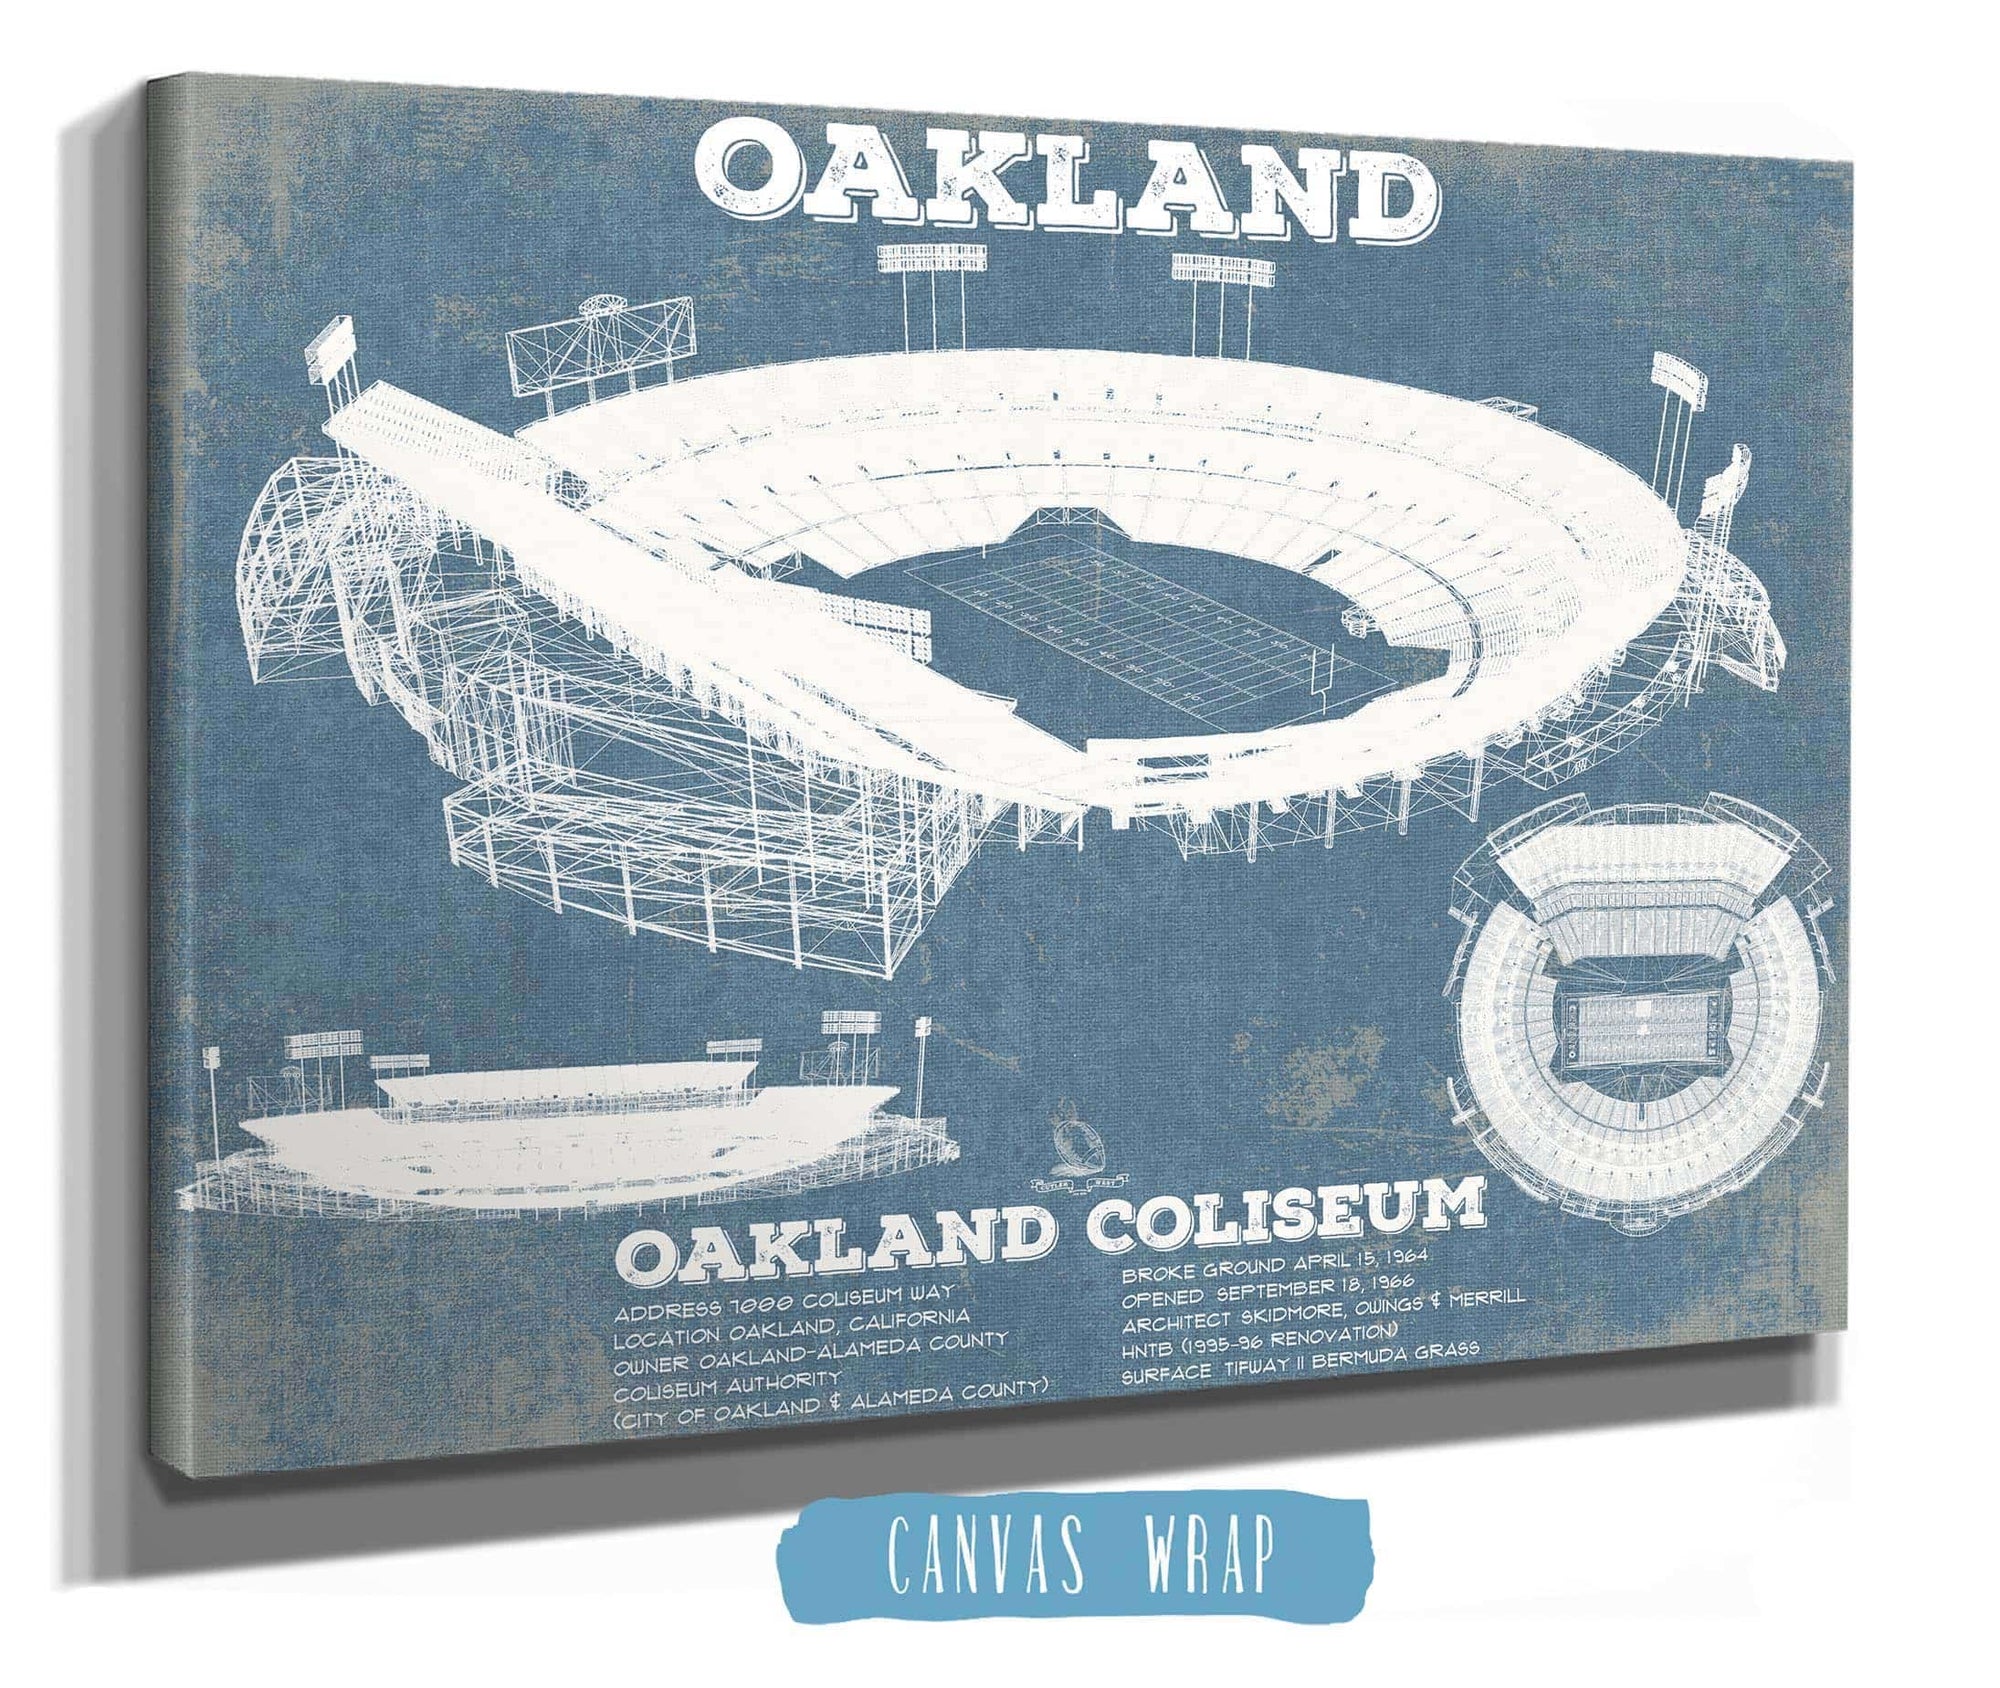 Cutler West Pro Football Collection Oakland Raiders Oakland Coliseum NFL Vintage Football Print